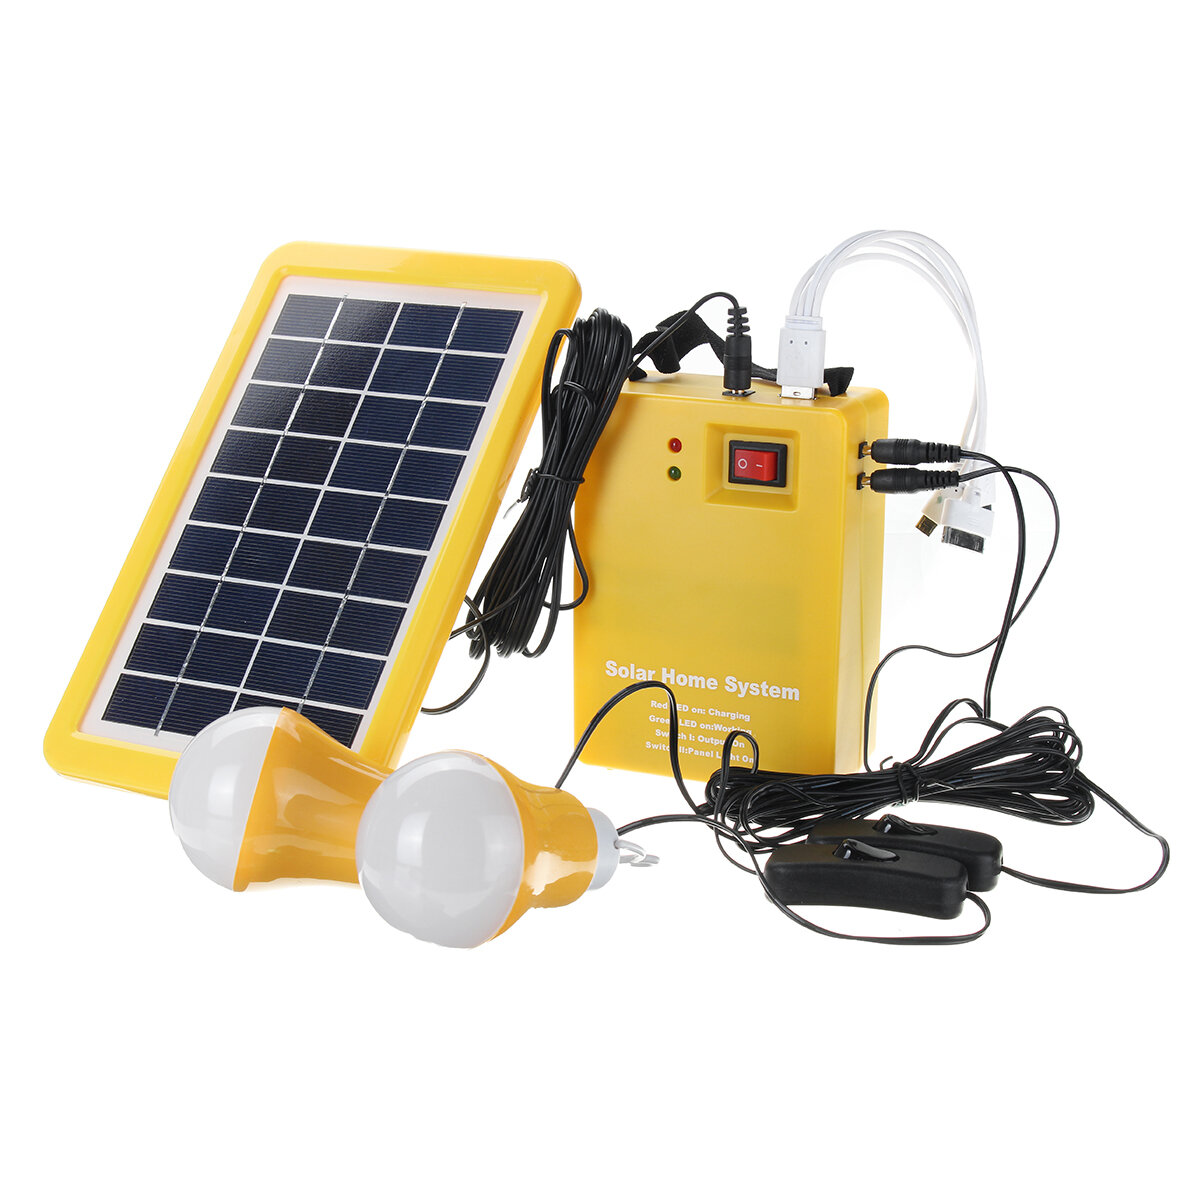 12V DC Sonnenkollektoren Beleuchtung Ladegenerator Home Outdoor Energy Solarbetriebenes System